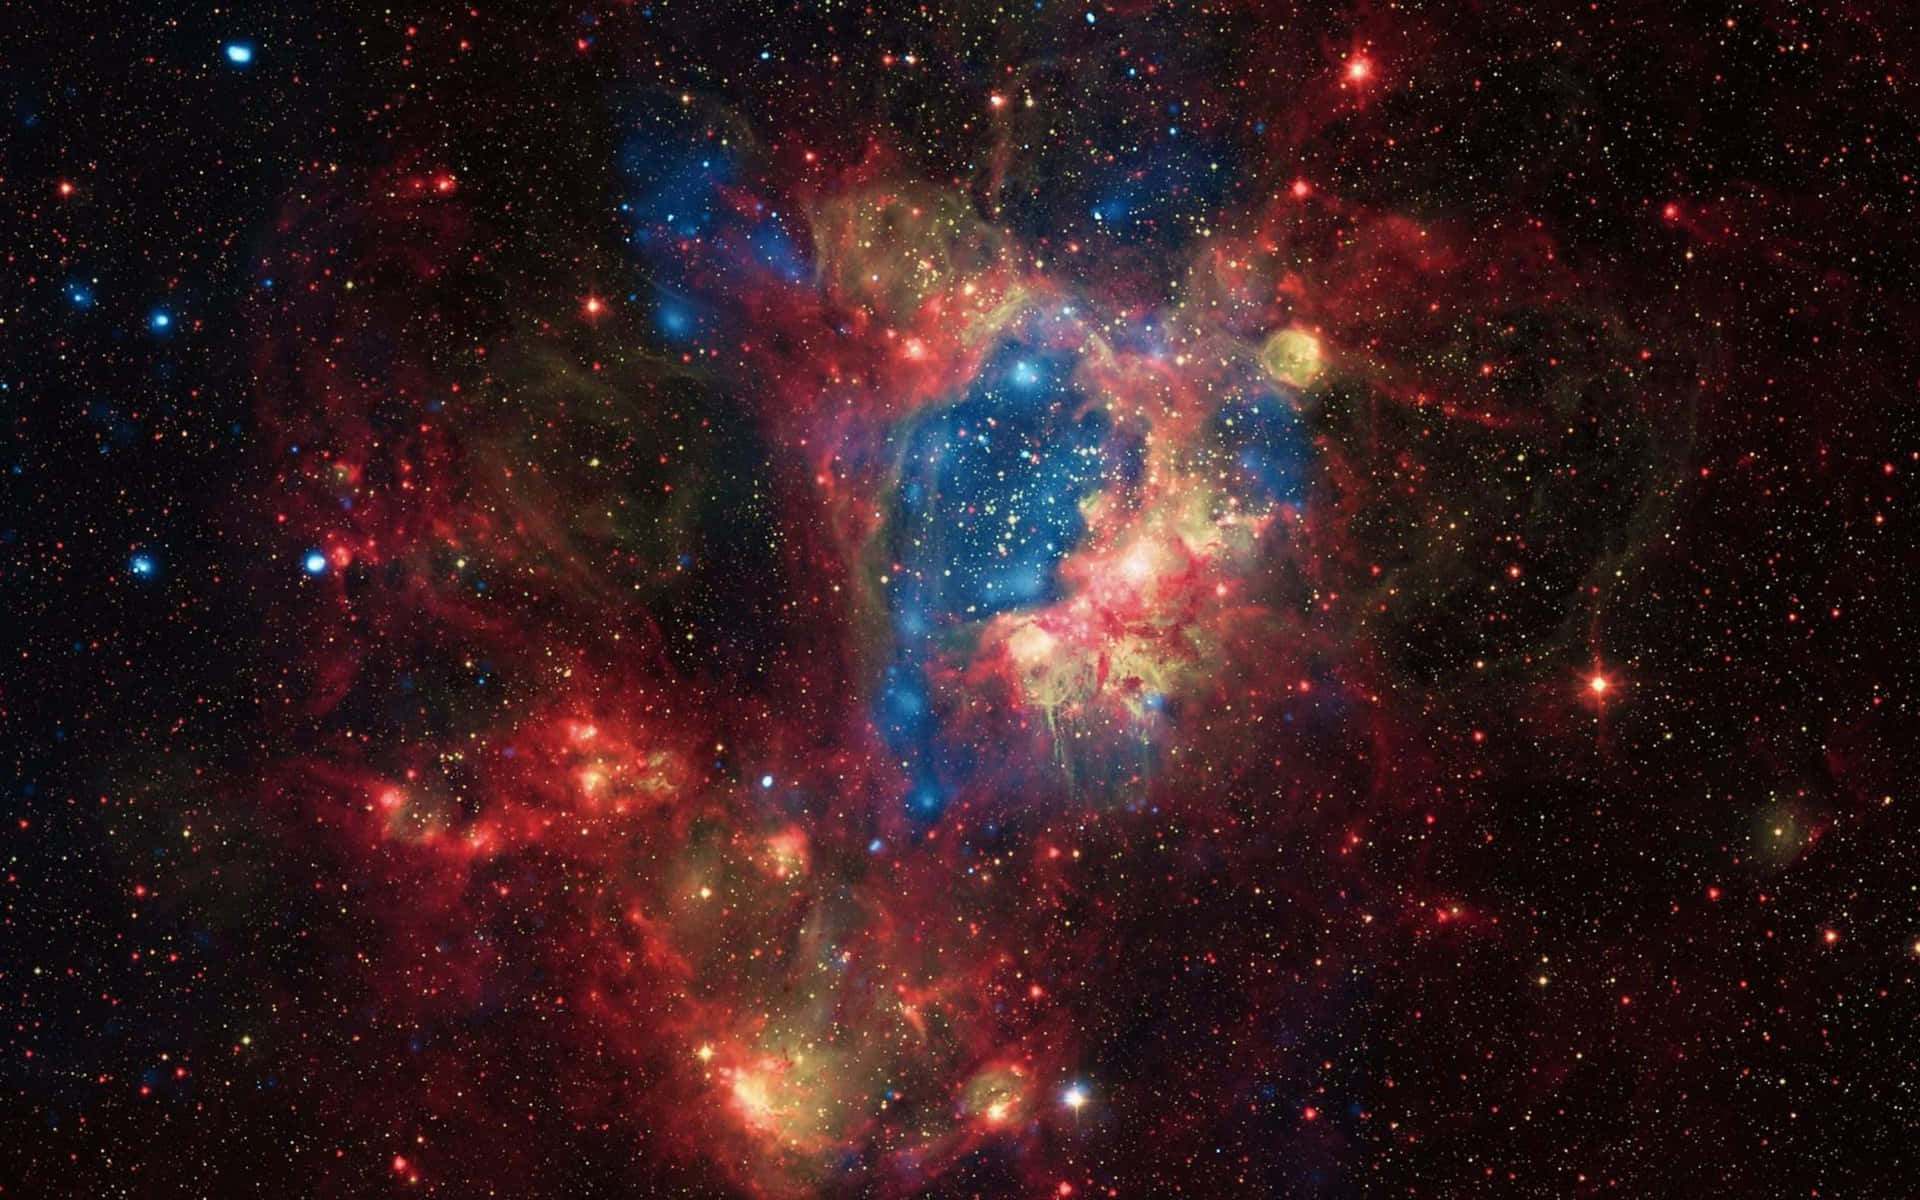 4k Galaxy Image Of A Starry Sky Wallpaper